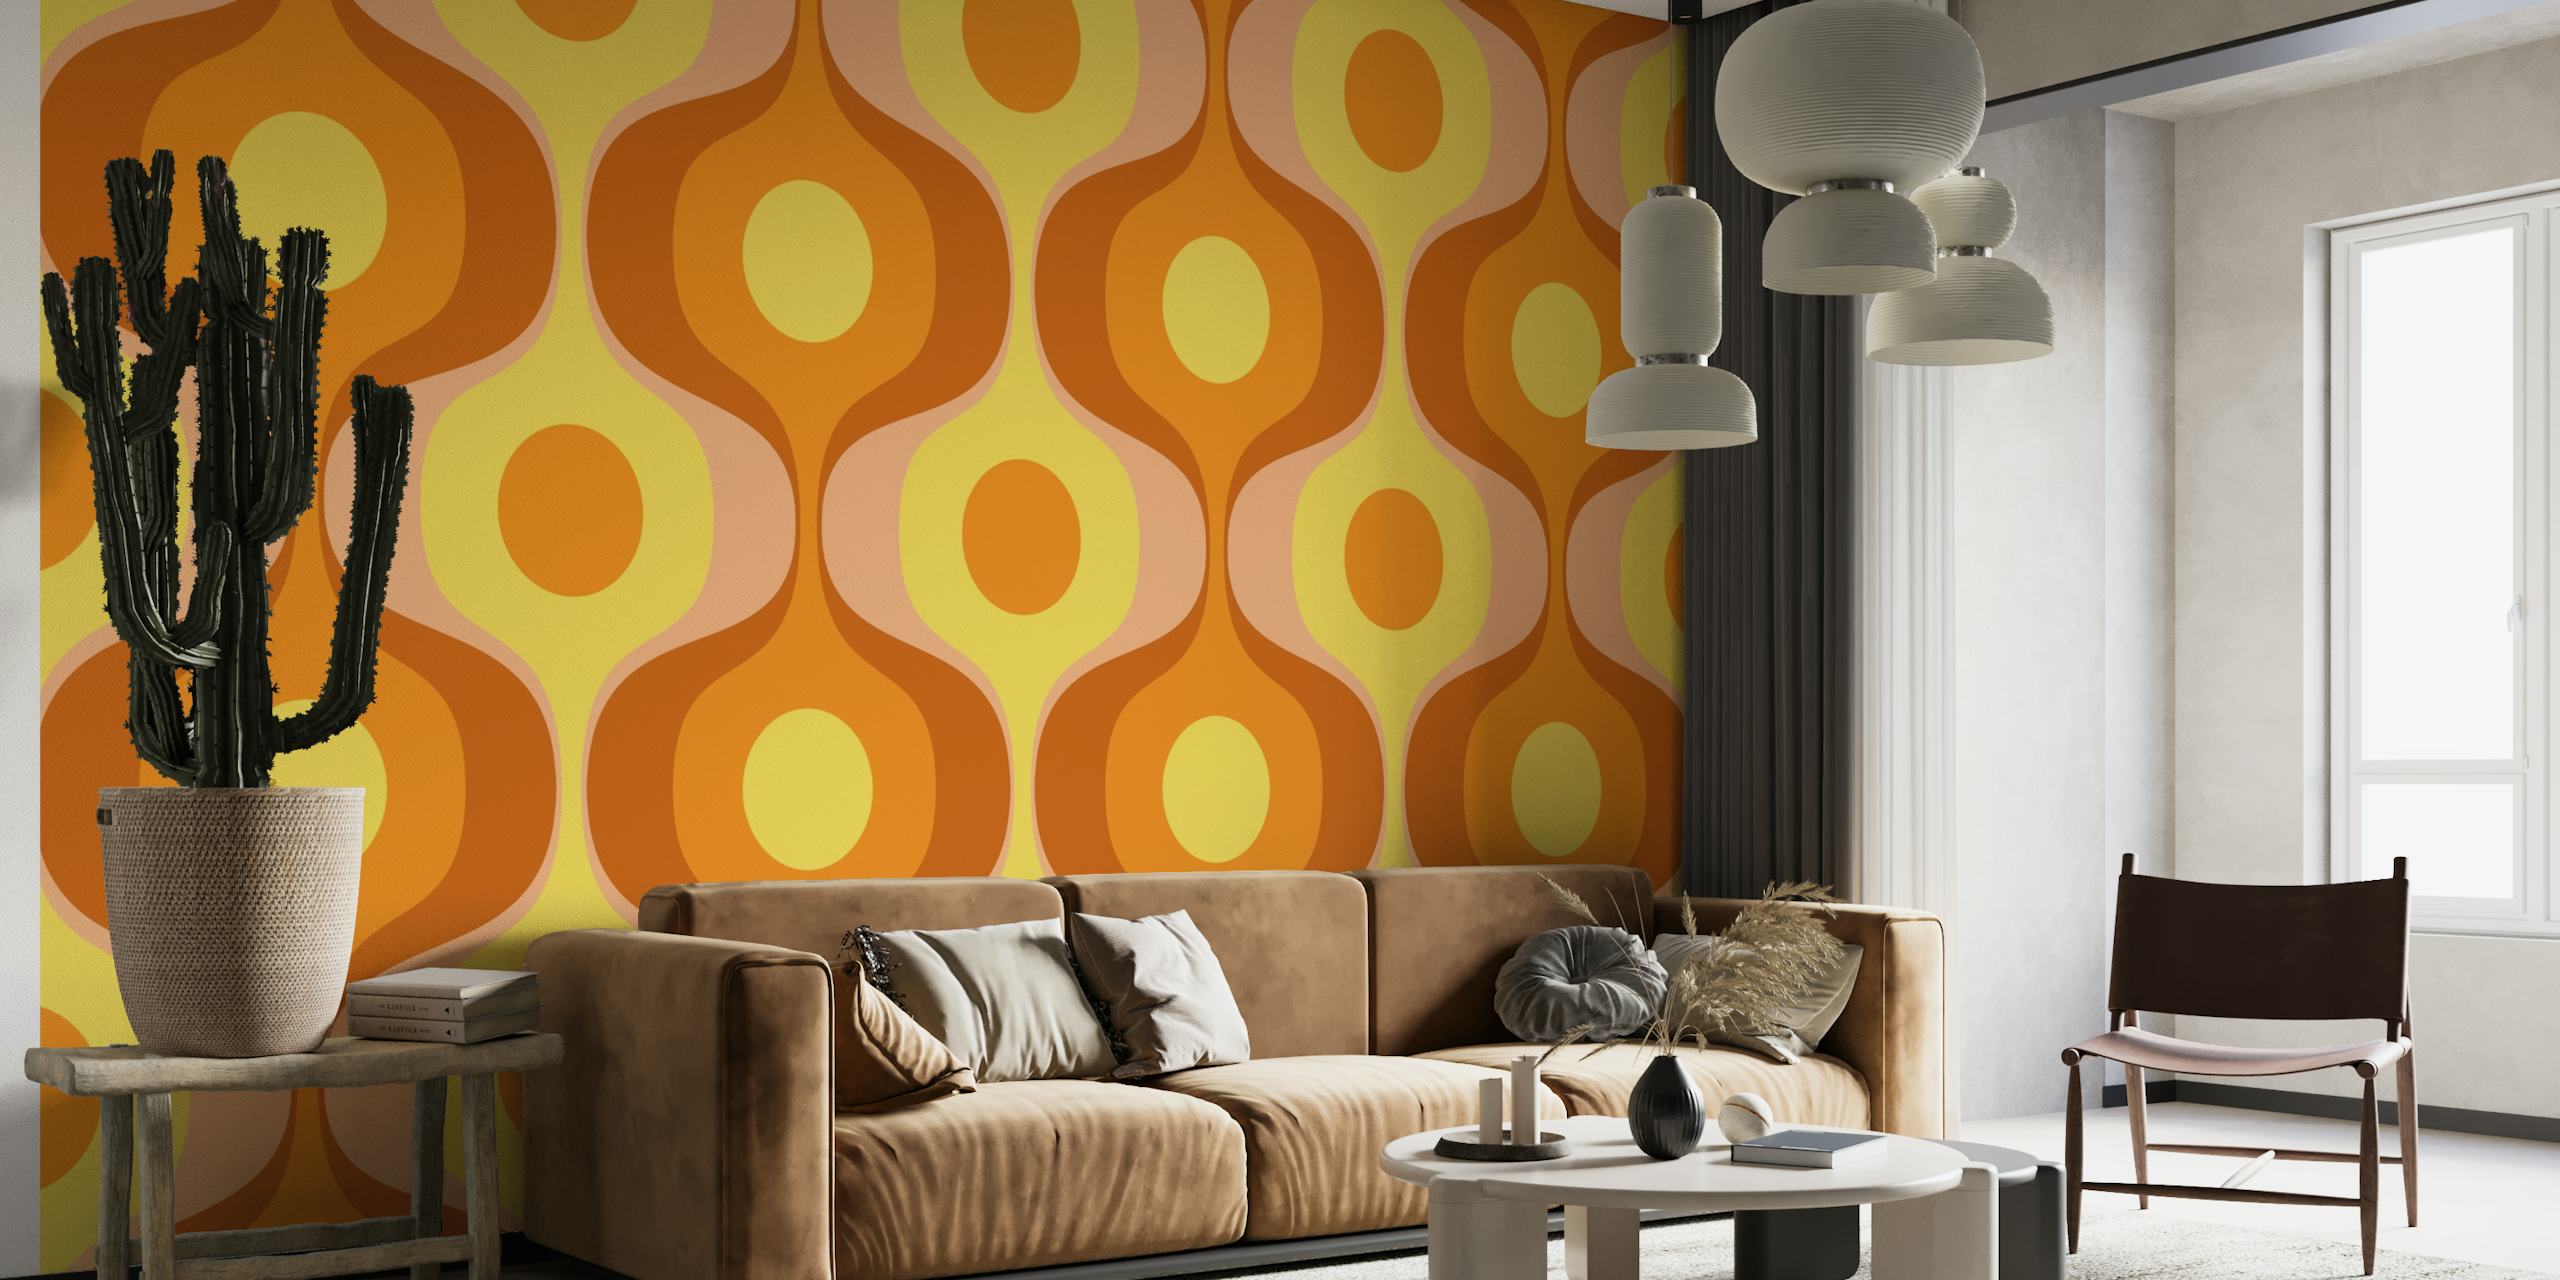 Yellow and orange retro 70s style geometric pattern wall mural